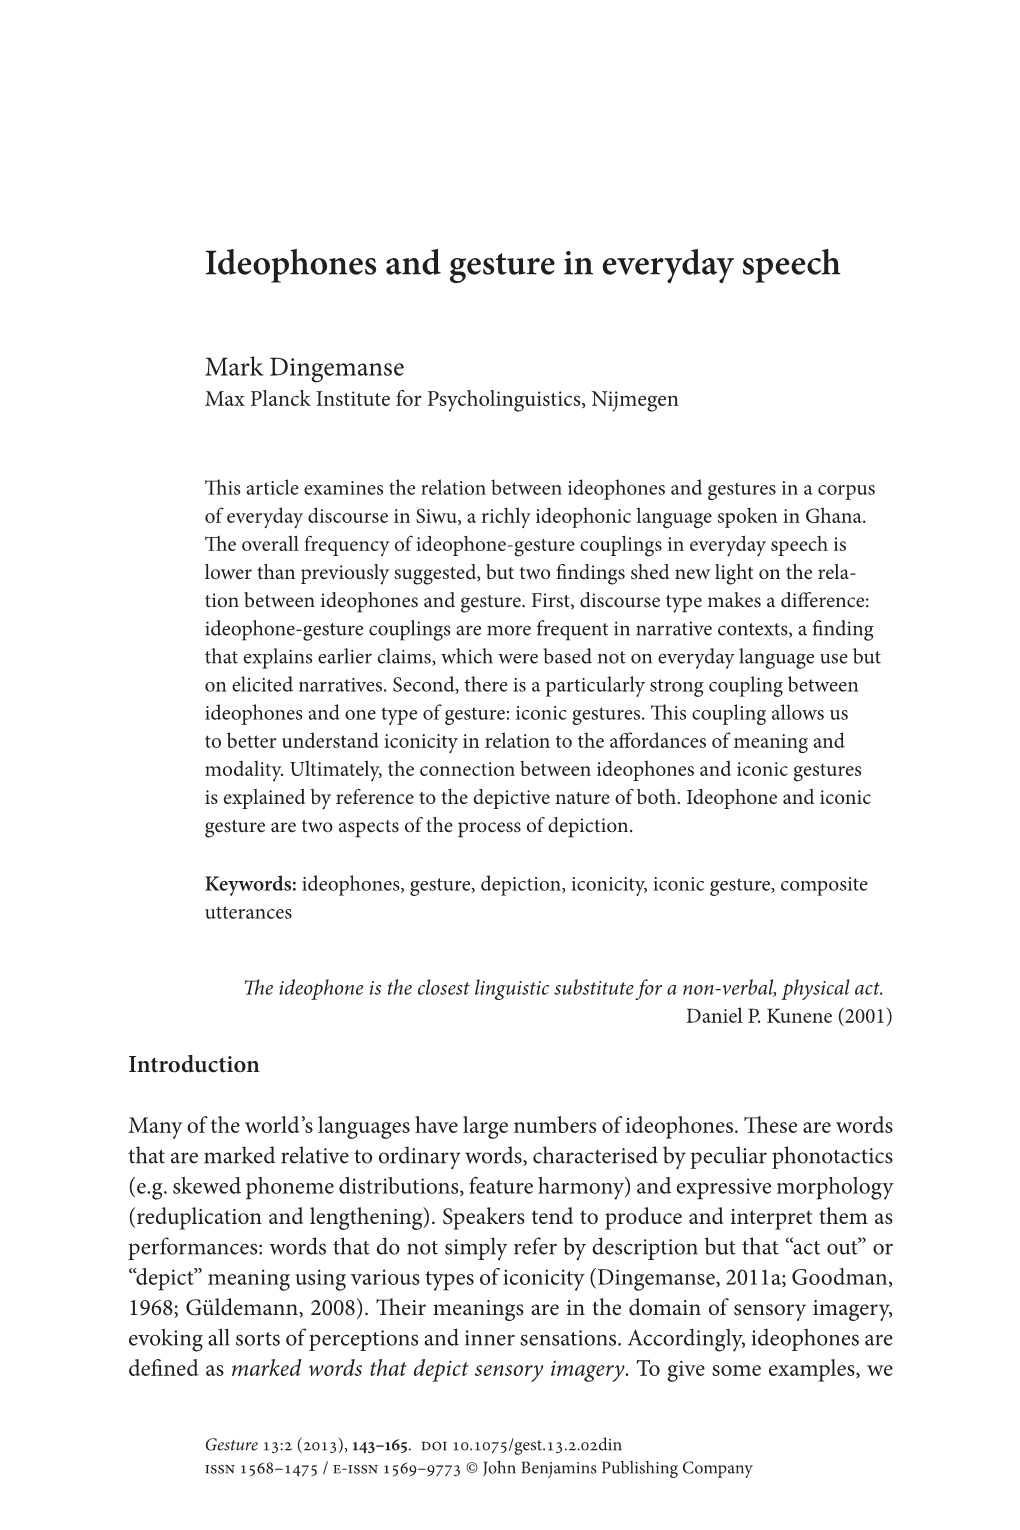 Ideophones and Gesture in Everyday Speech